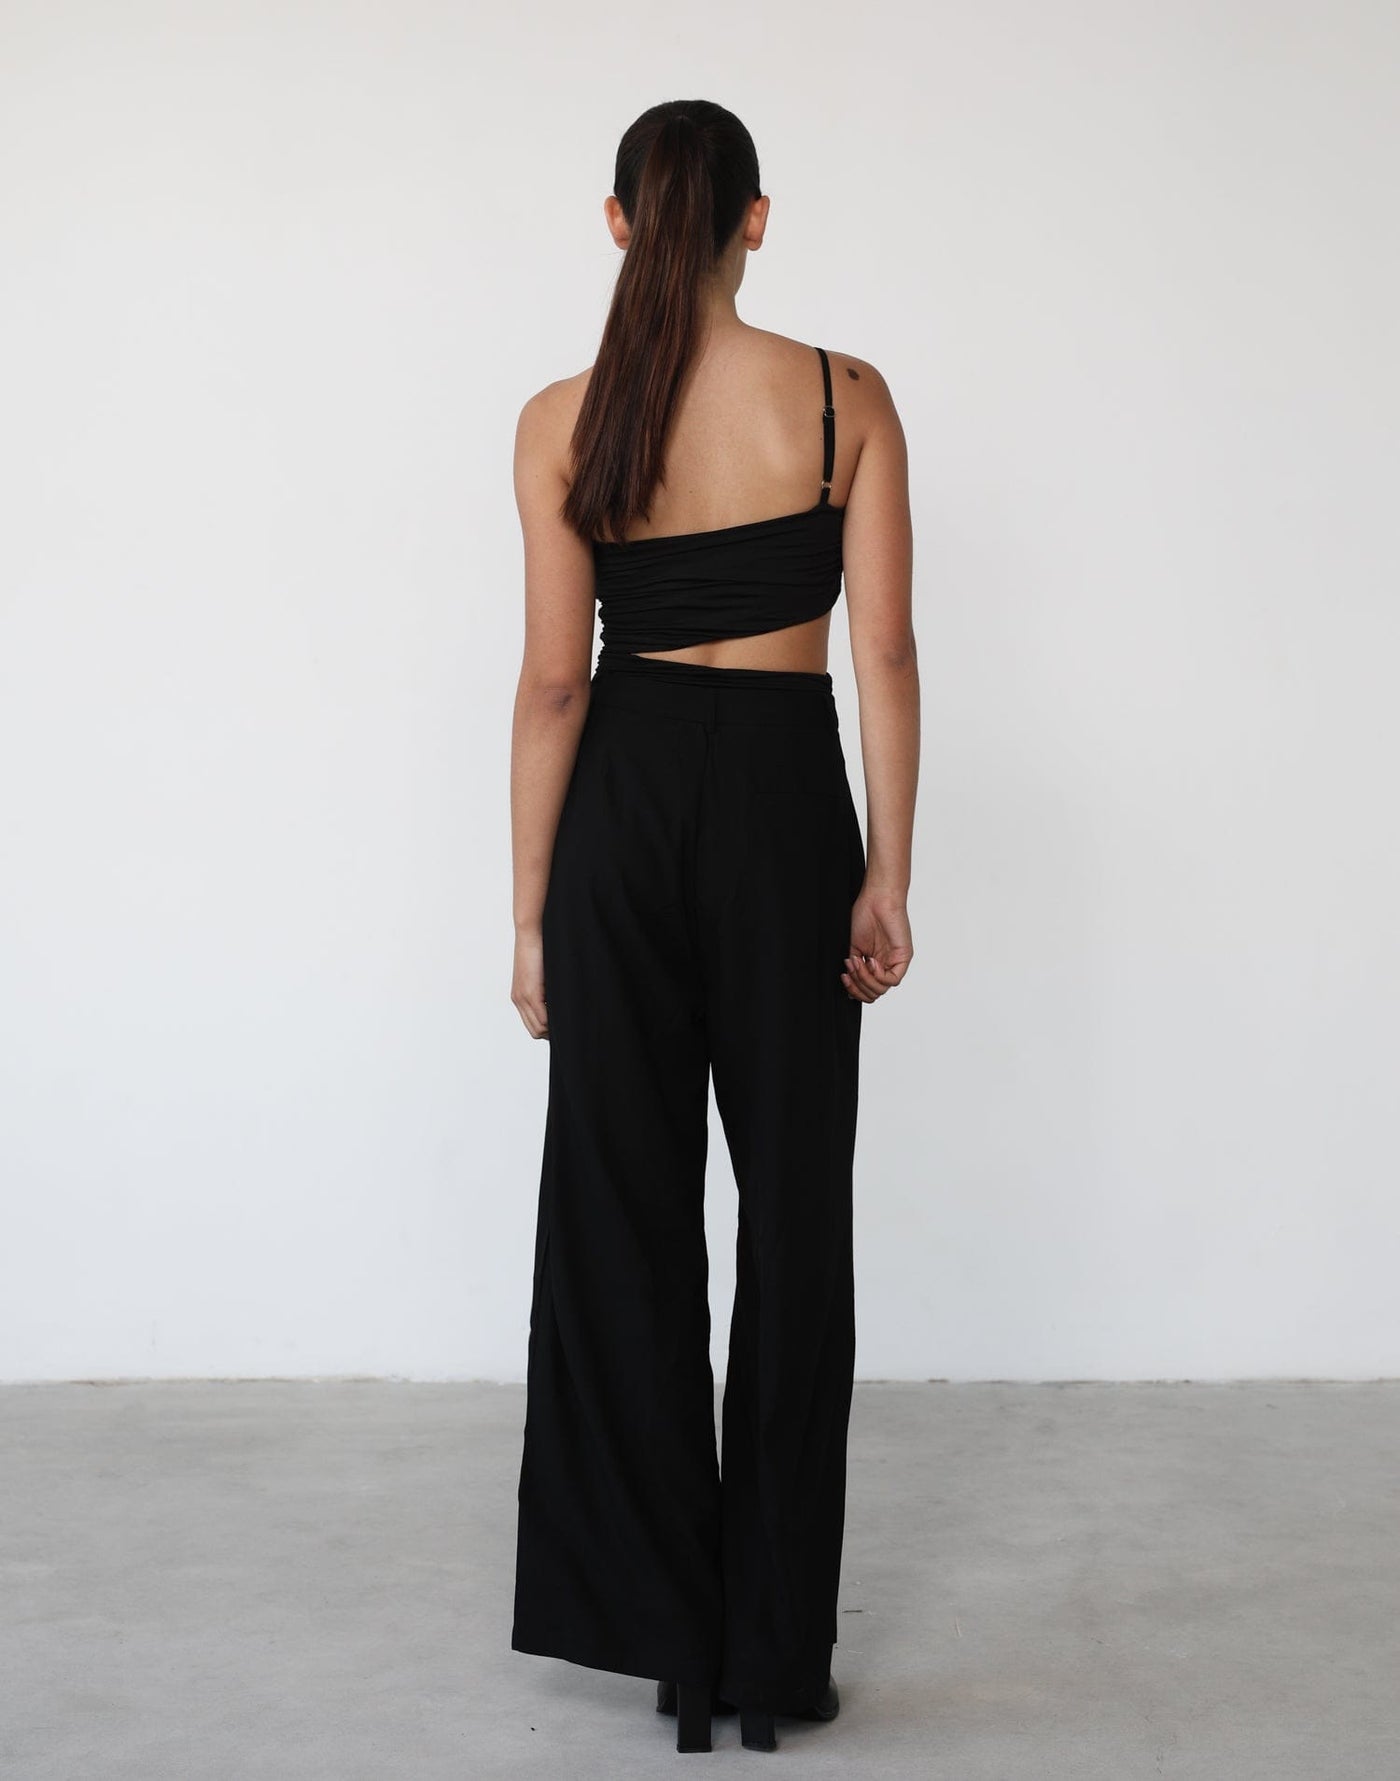 Katarina Bodysuit (Black) - Black Cut Out Bodysuit - Women's Tops - Charcoal Clothing